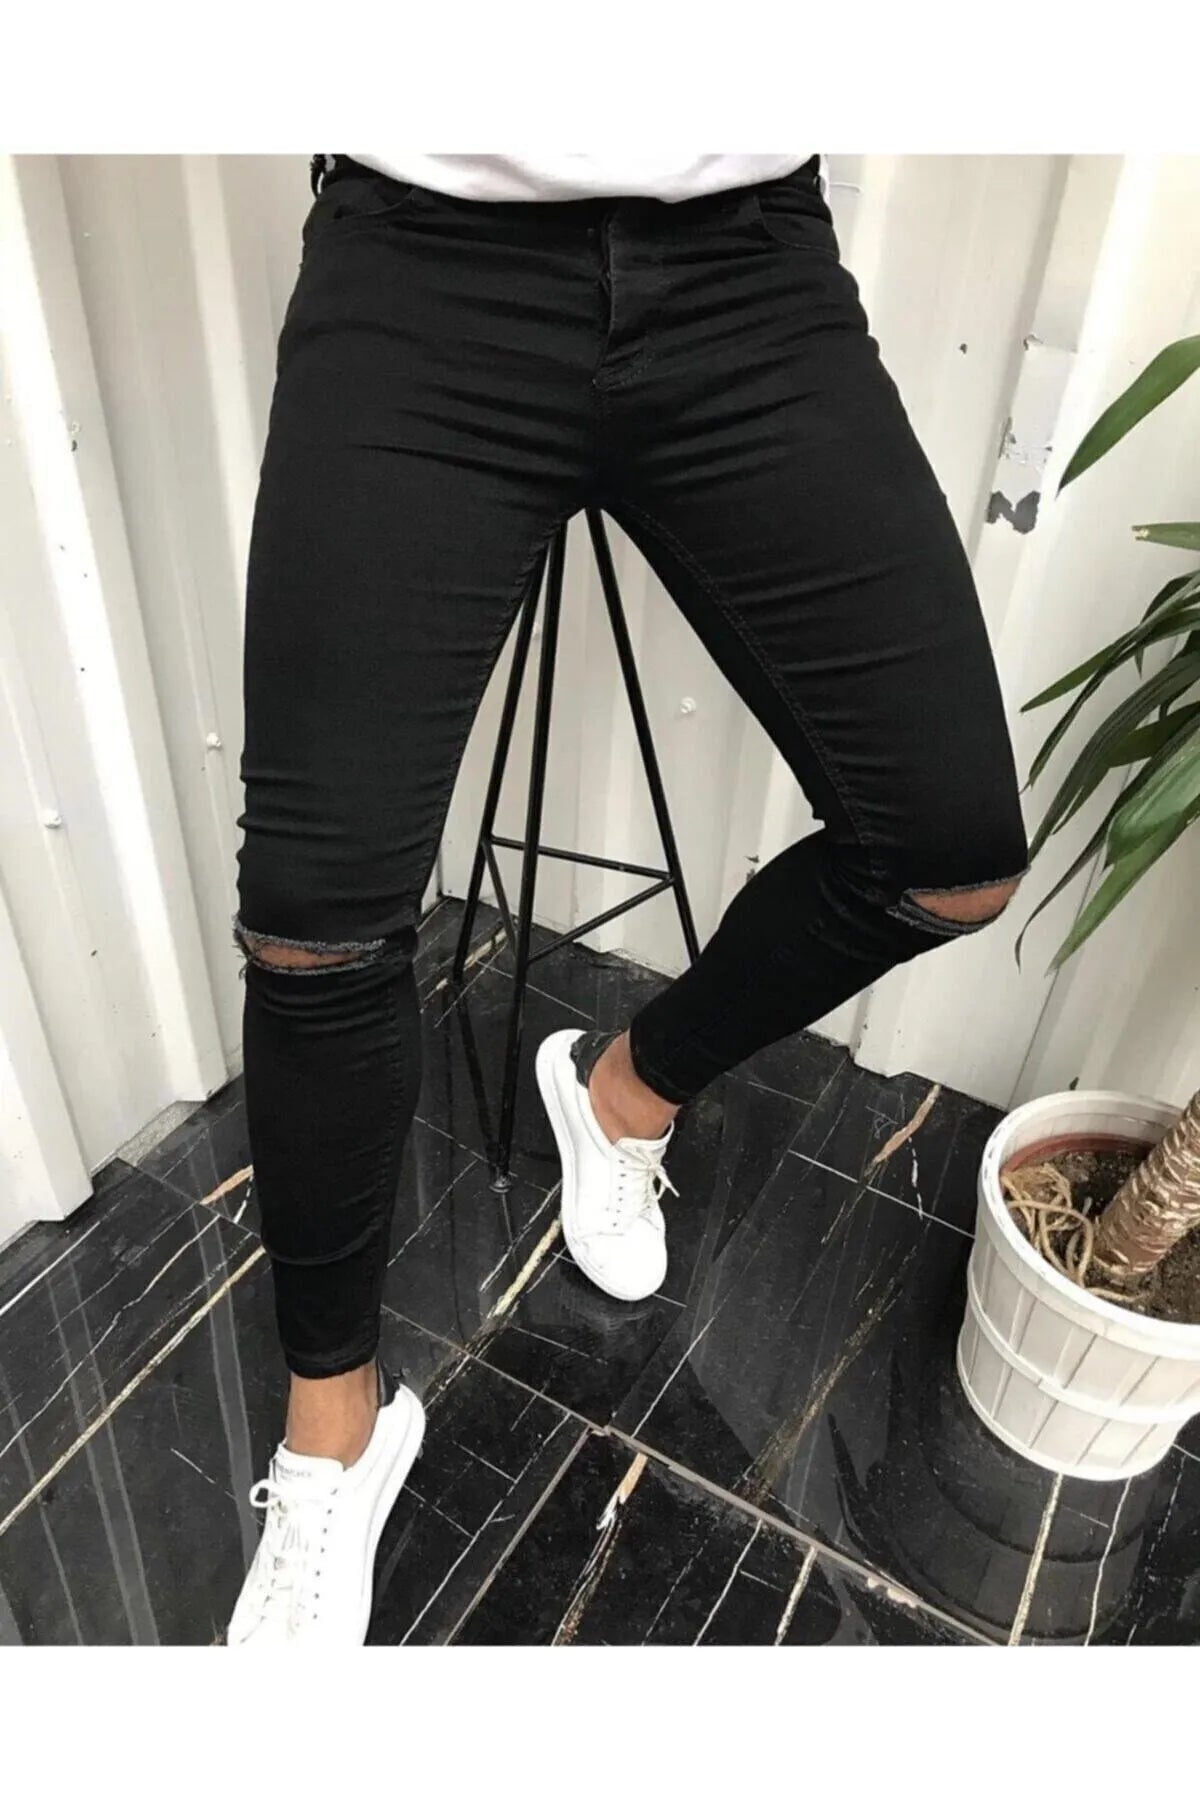 renere hun er kort Black Ripped Skinny Jeans 999 | Sneakerjeans